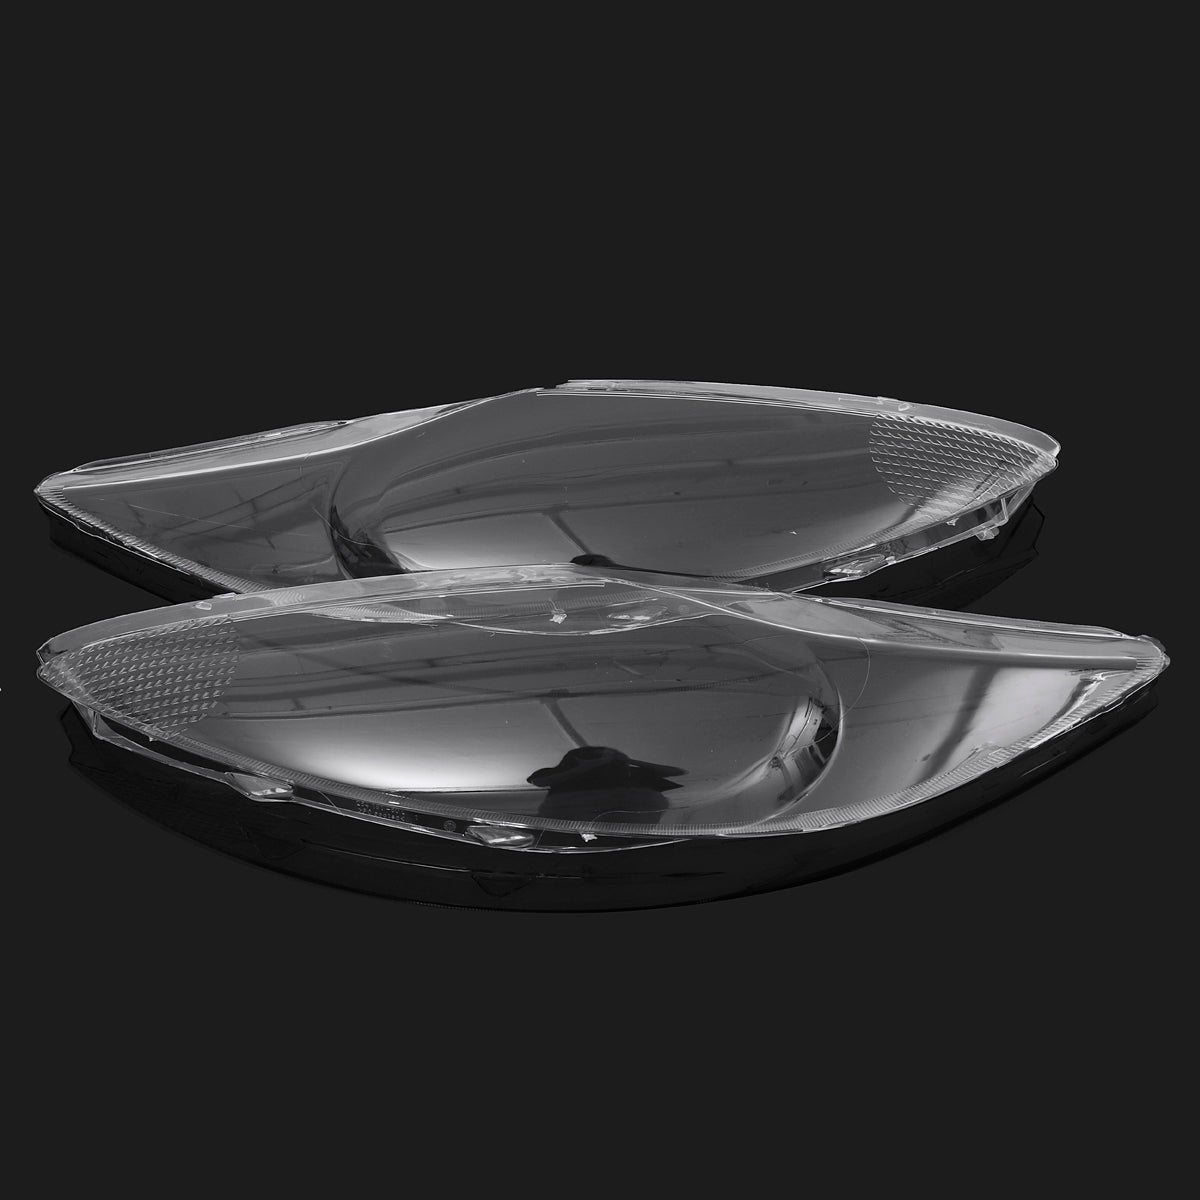 Dark Slate Gray Car Headlight Headlamp Clear Lens Auto Shell Cover Right/Left For Ford Fiesta 09-12